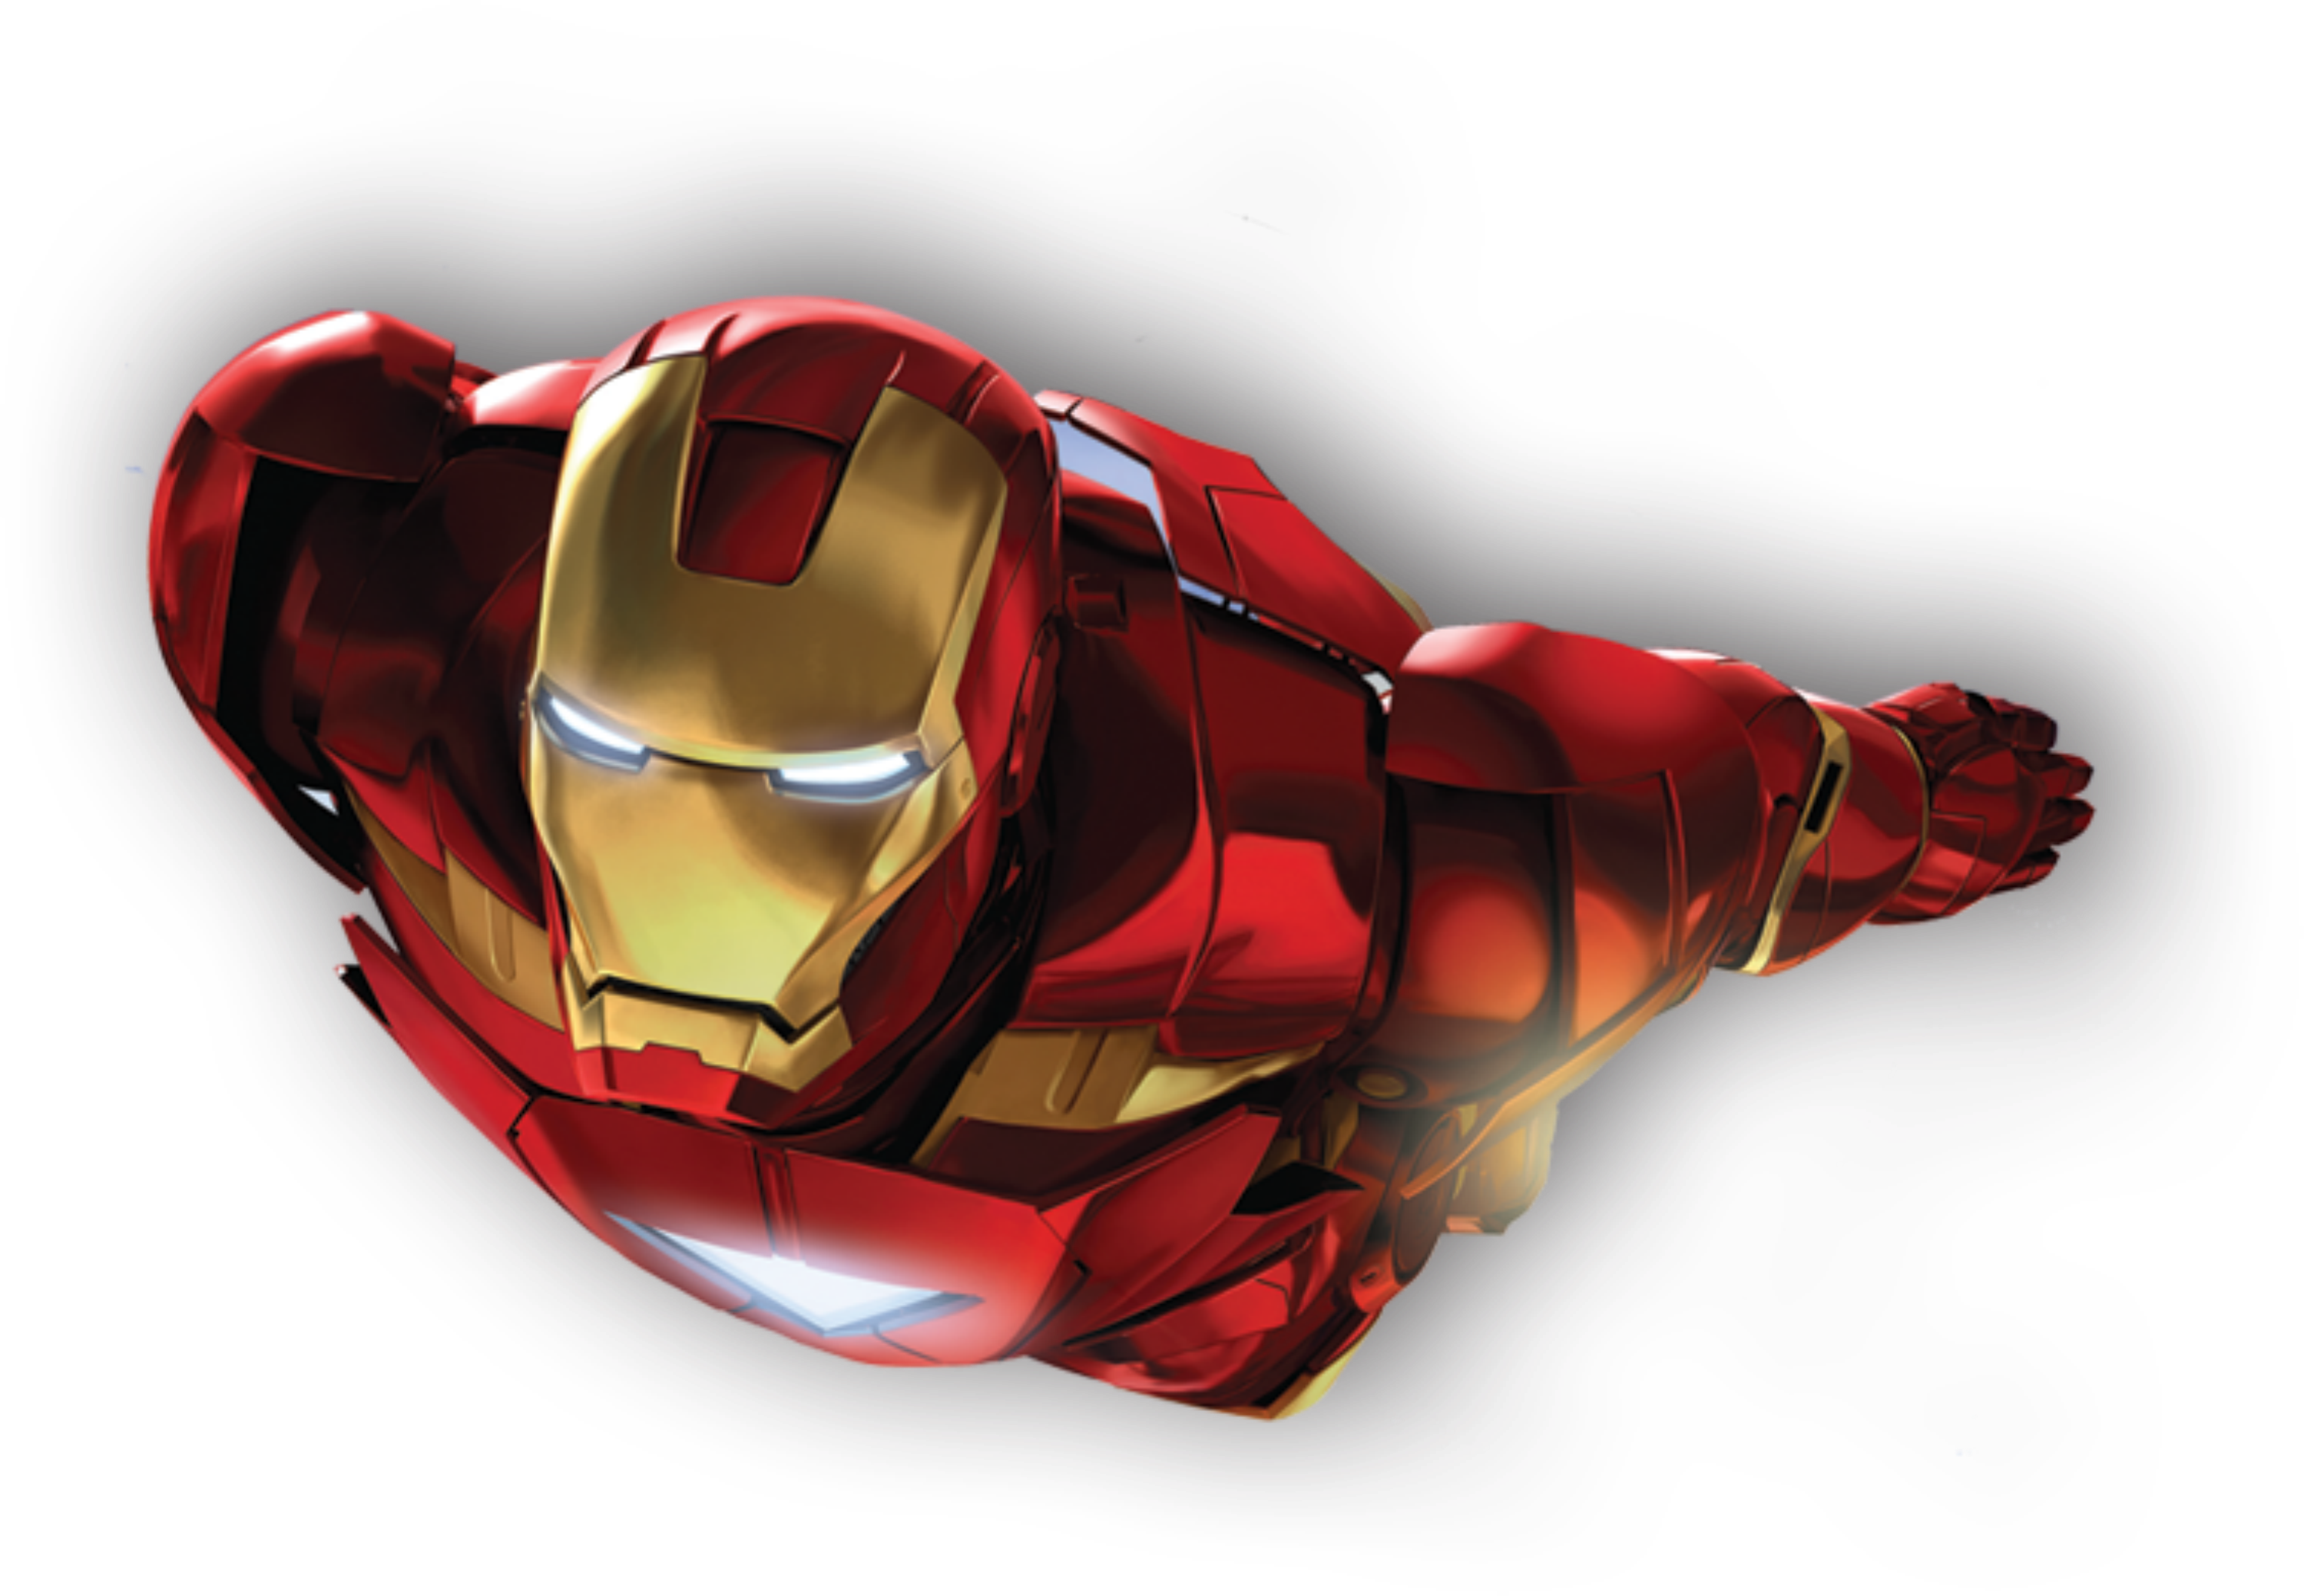 Iron man,Red,Superhero,Fictional character,Avengers